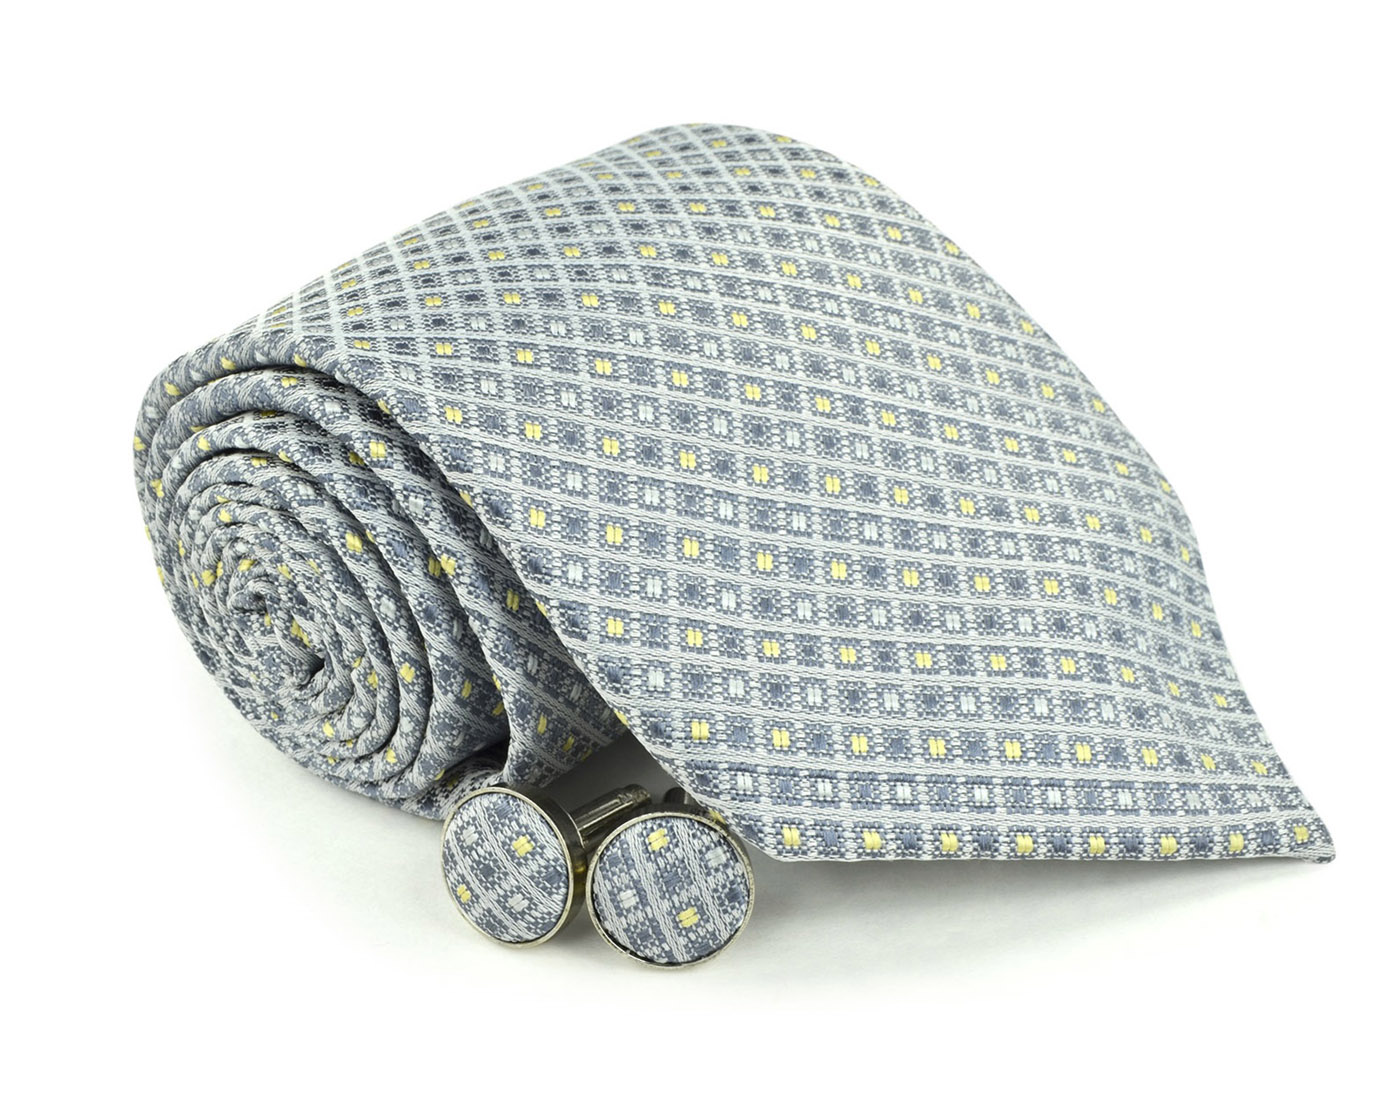 Moda Di Raza Men's NeckTies - 3 Inch Tie - Gift Box Sets - Yellow Tie With Cuff-link In Box